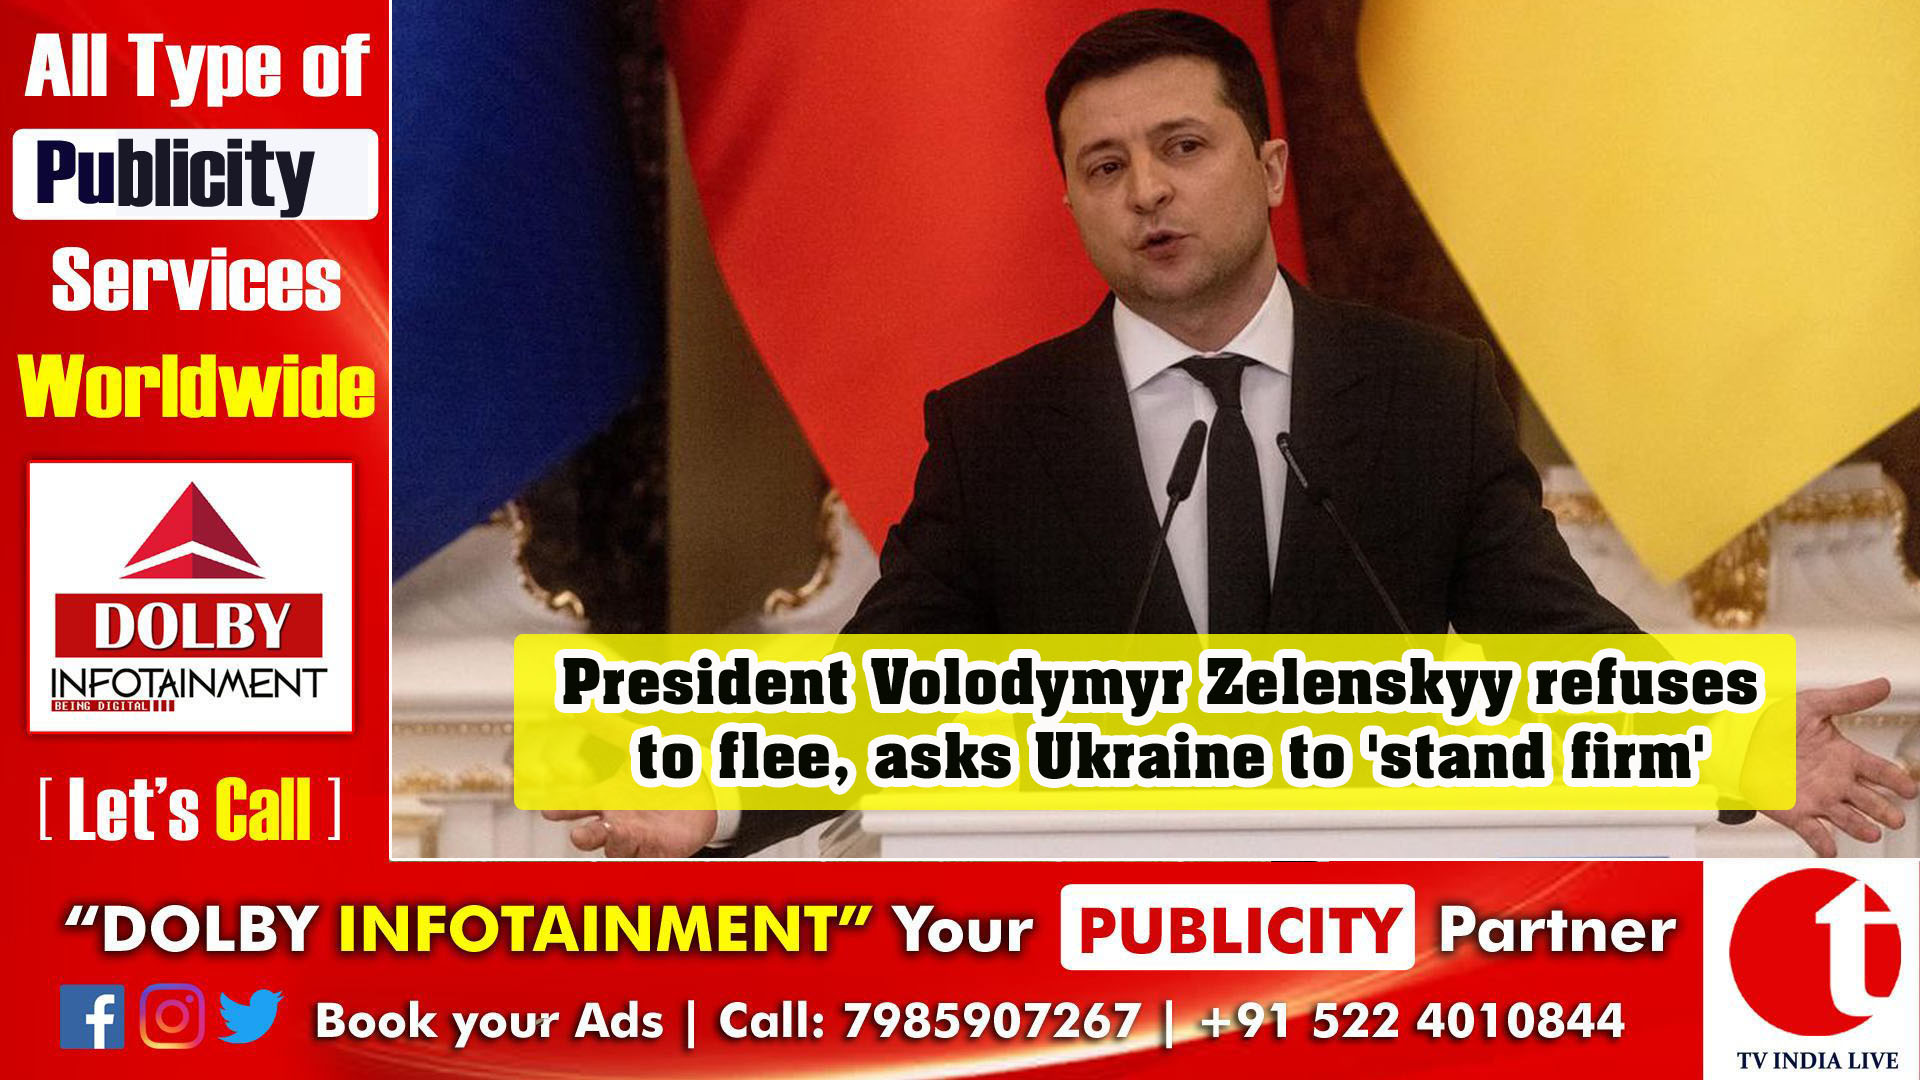 President Volodymyr Zelenskyy refuses to flee, asks Ukraine to 'stand firm'